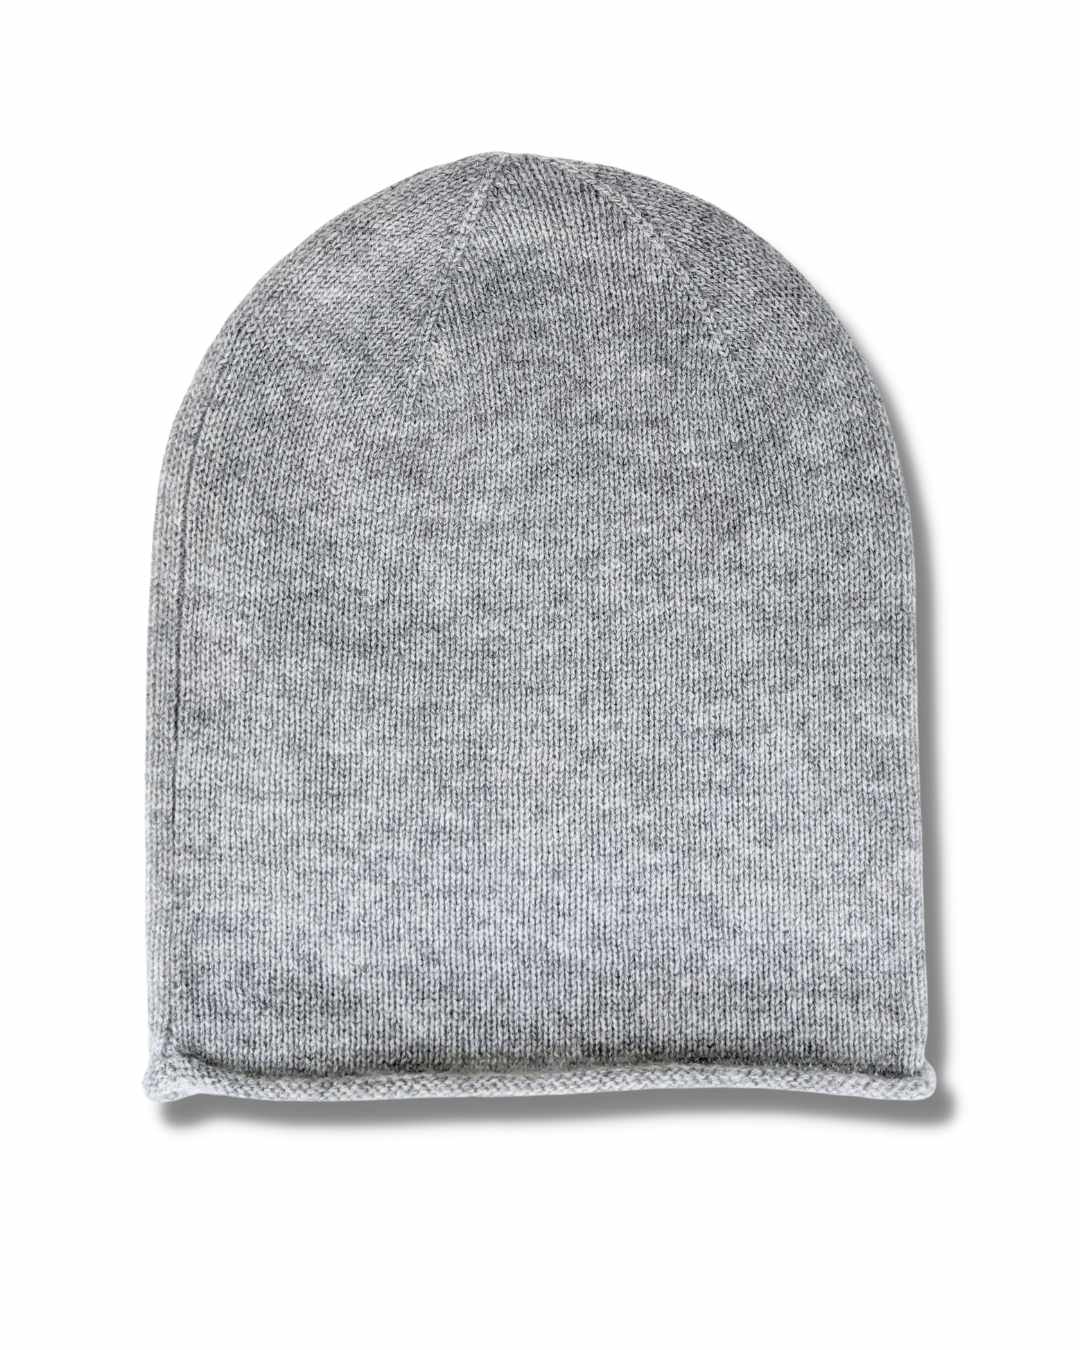 grey cashmere hat